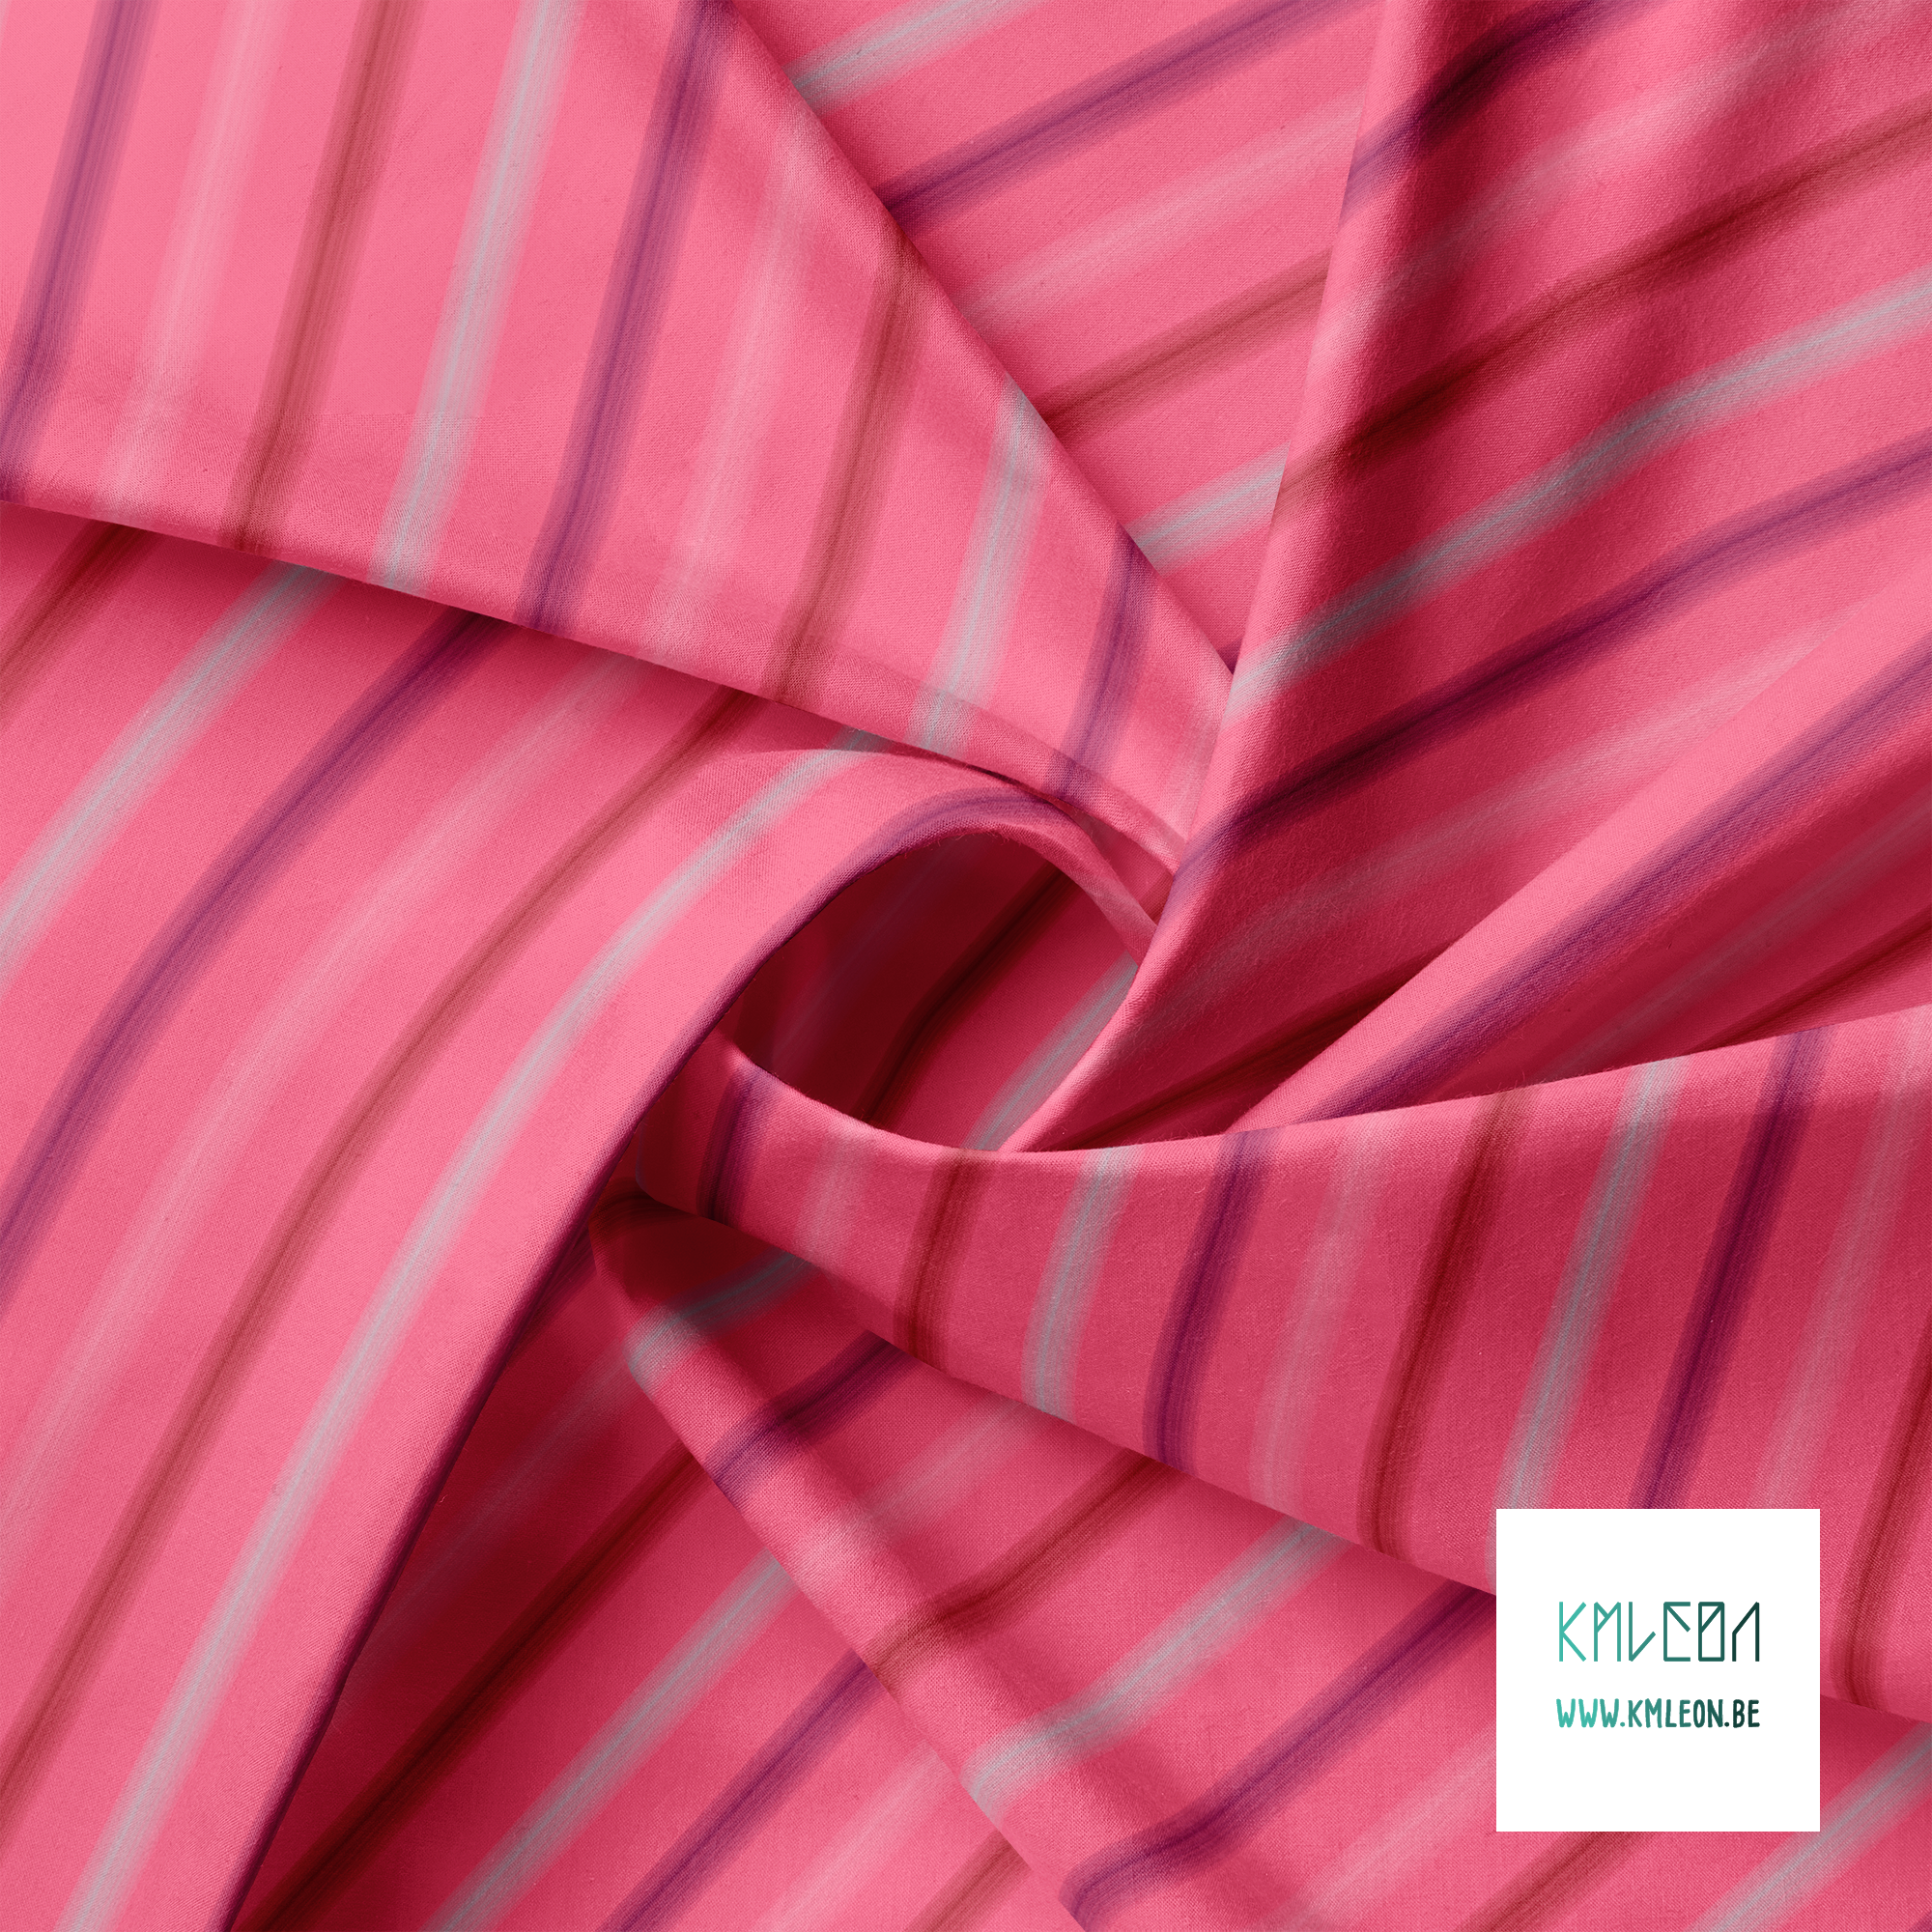 Zachte horizontale strepen in paars, rood, lichtblauw en roze stof